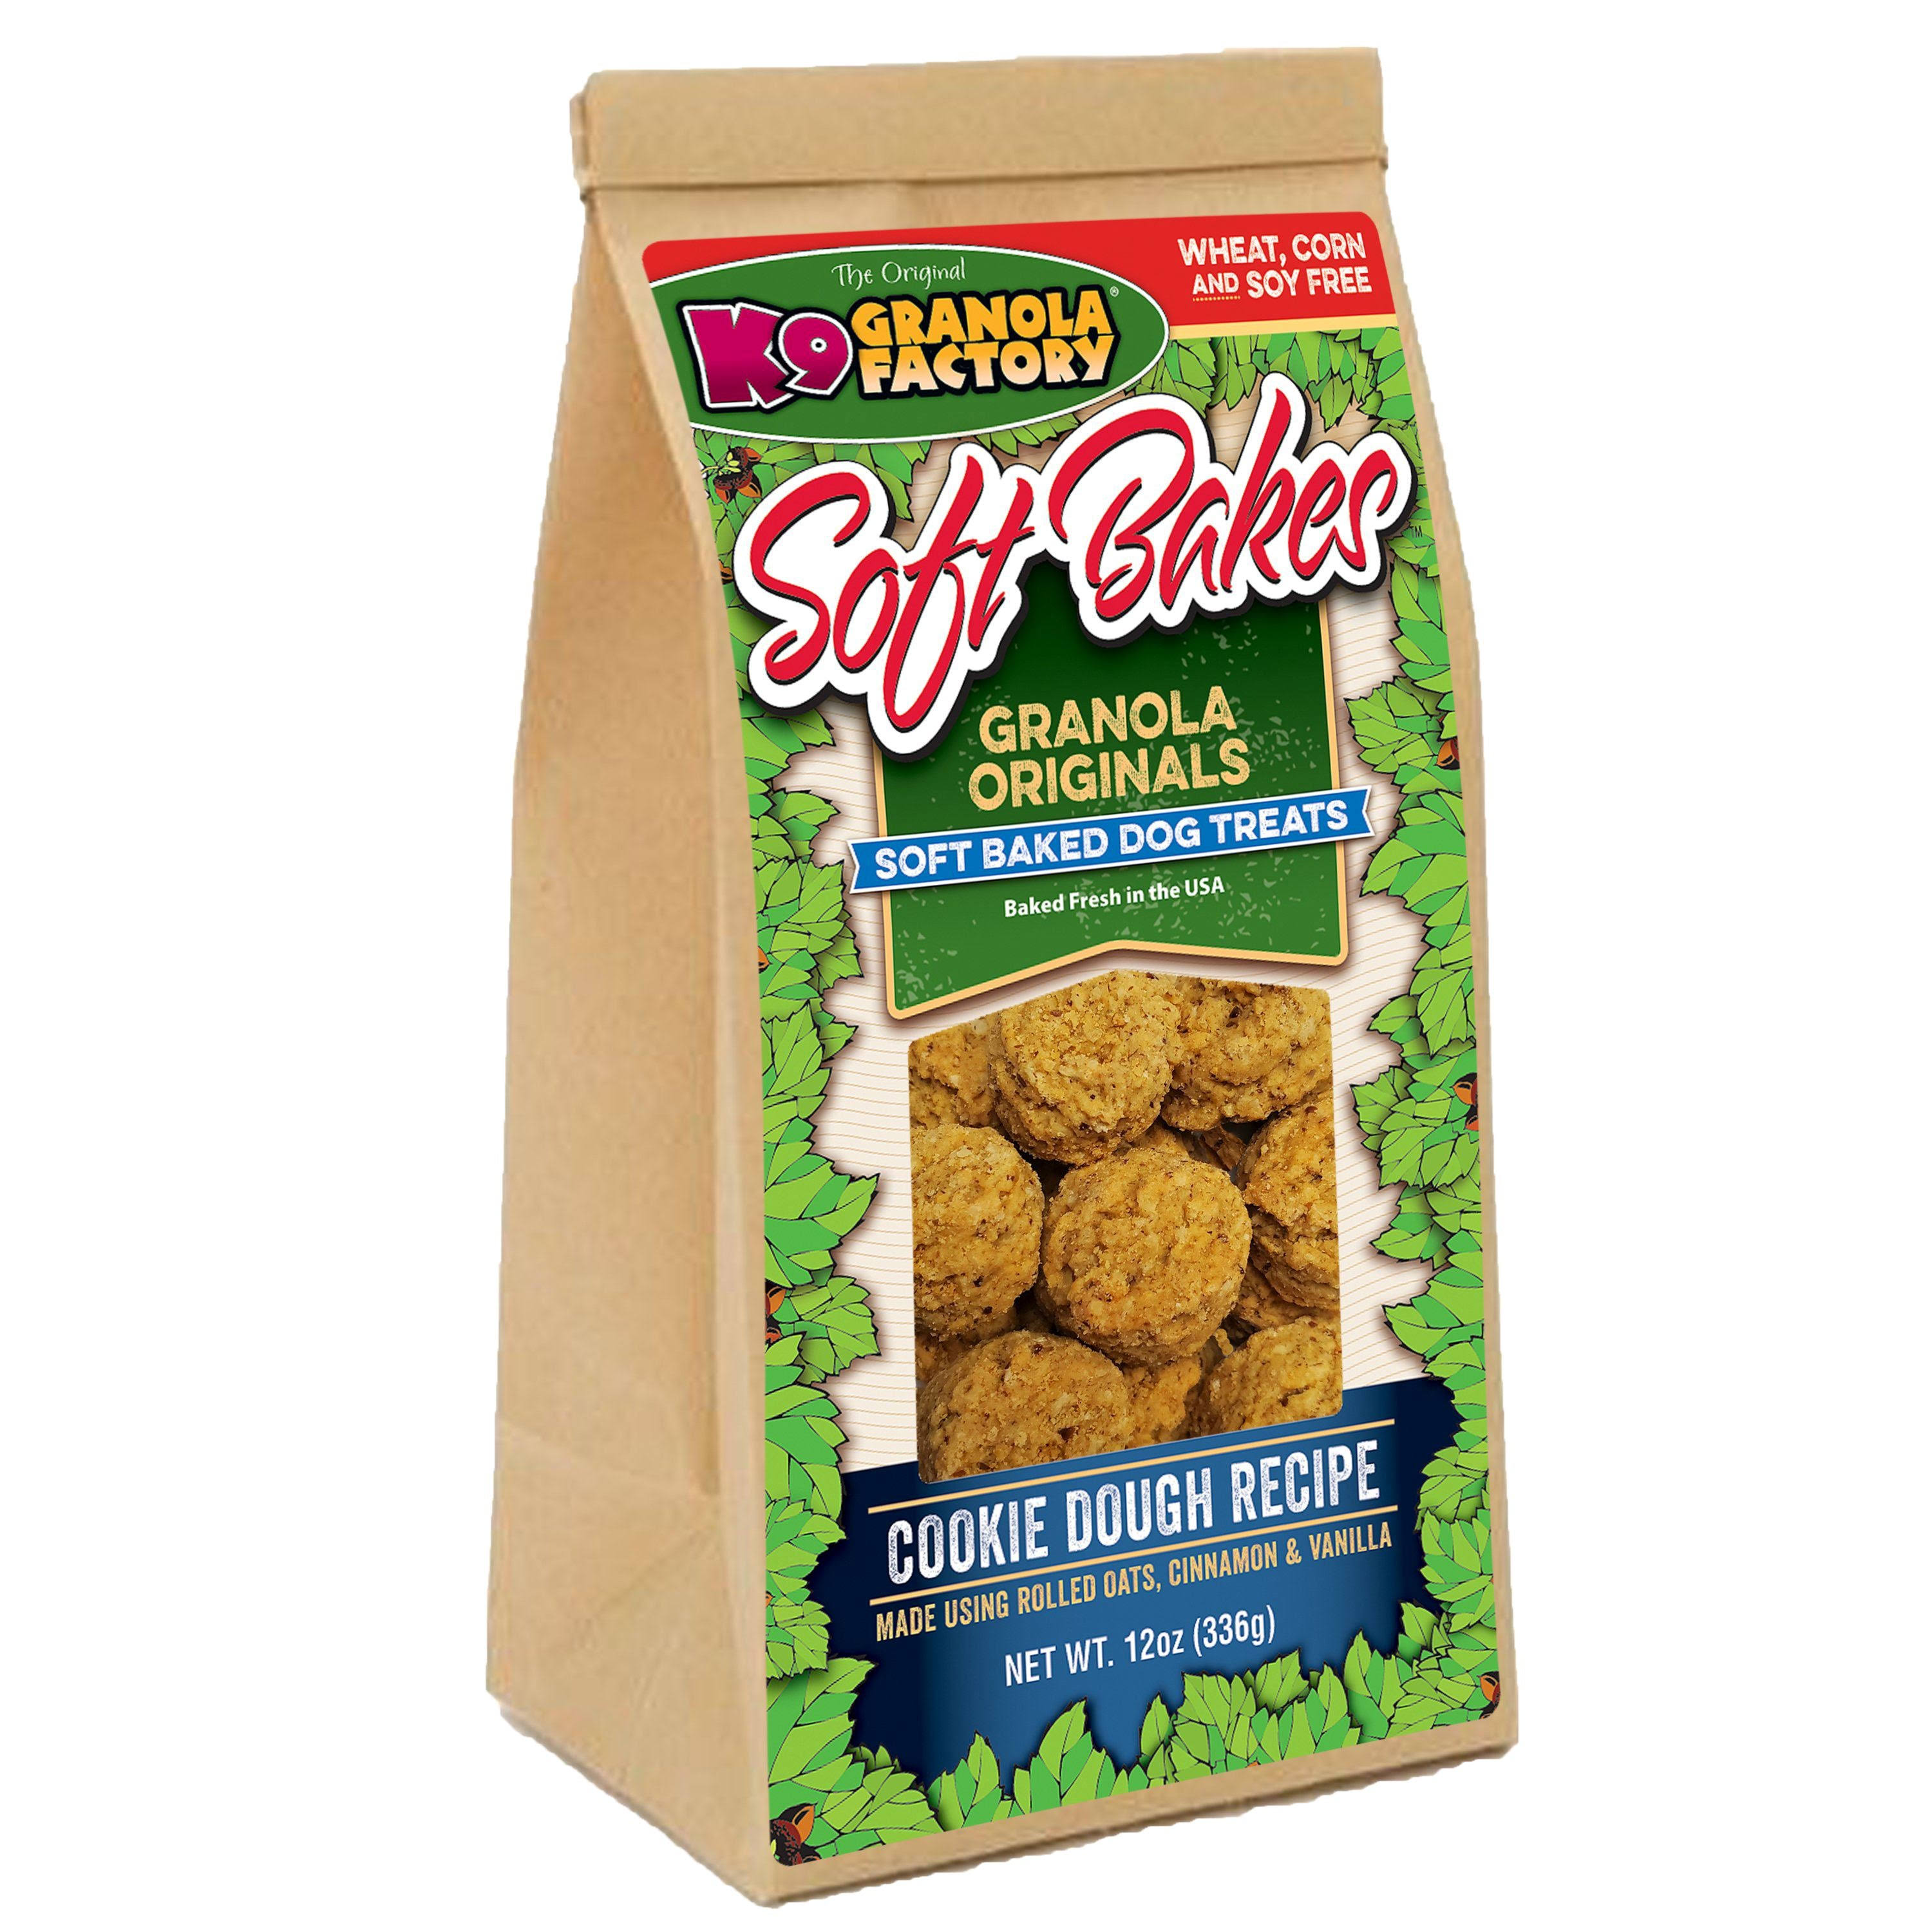 K9 Granola Factory Soft Bakes Dog Treats - Cookie Dough - 12 oz Bag